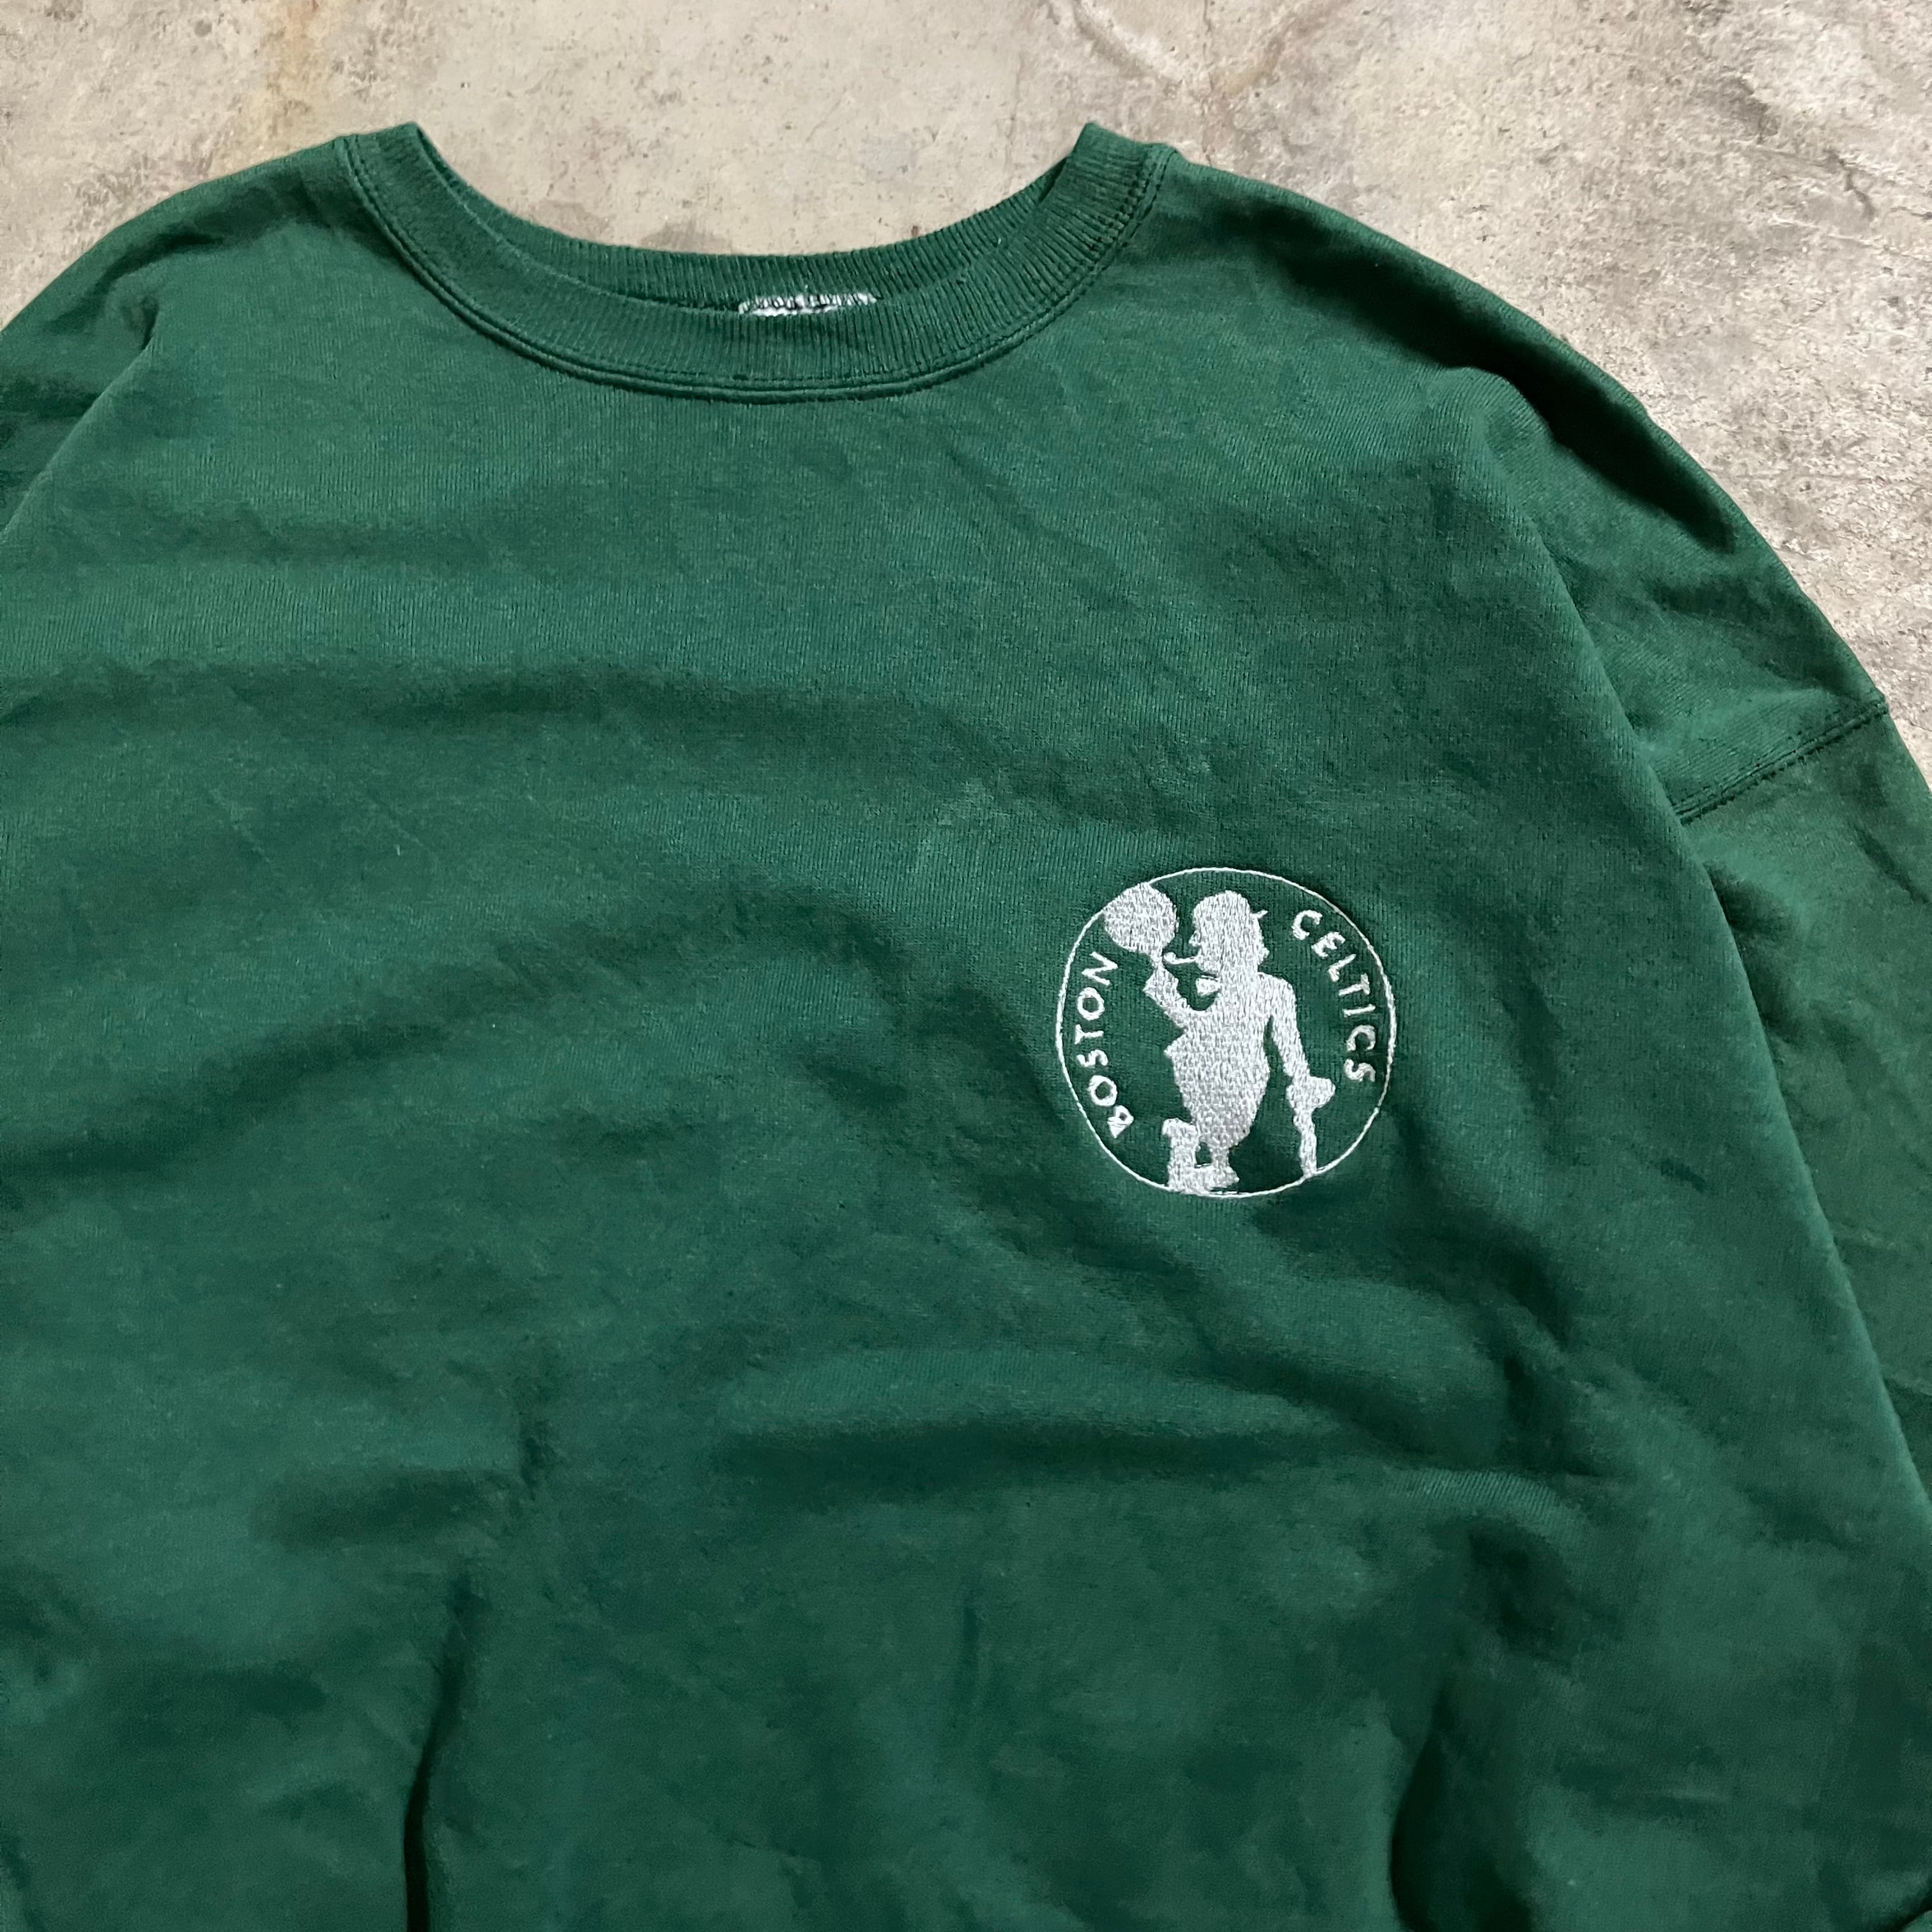 〖Hanes〗90’s NBA Boston･Celtics team logo embroidery sweat/ヘインズ 90年代 NBA  ボストン･セルティックス チーム ロゴ刺繍 スウェット/lsize/#0319/osaka | 〚EINS_archive〛 powered by  BASE